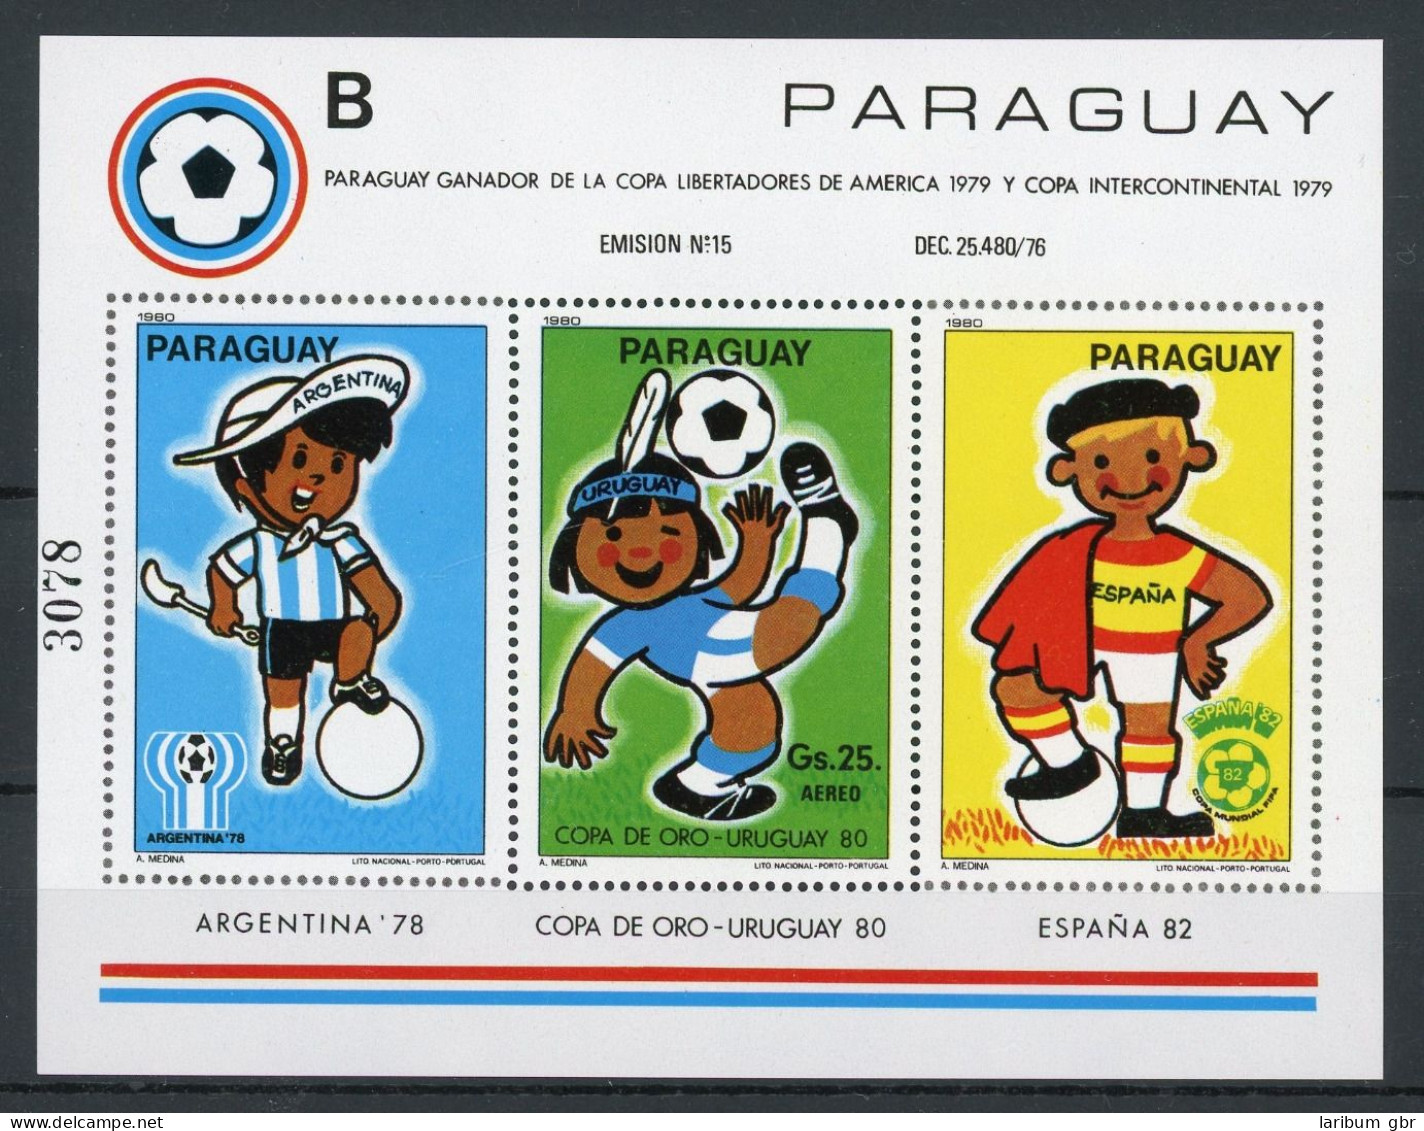 Paraguay Block 358 Postfrisch Fußball WM 1978 #GB637 - Paraguay